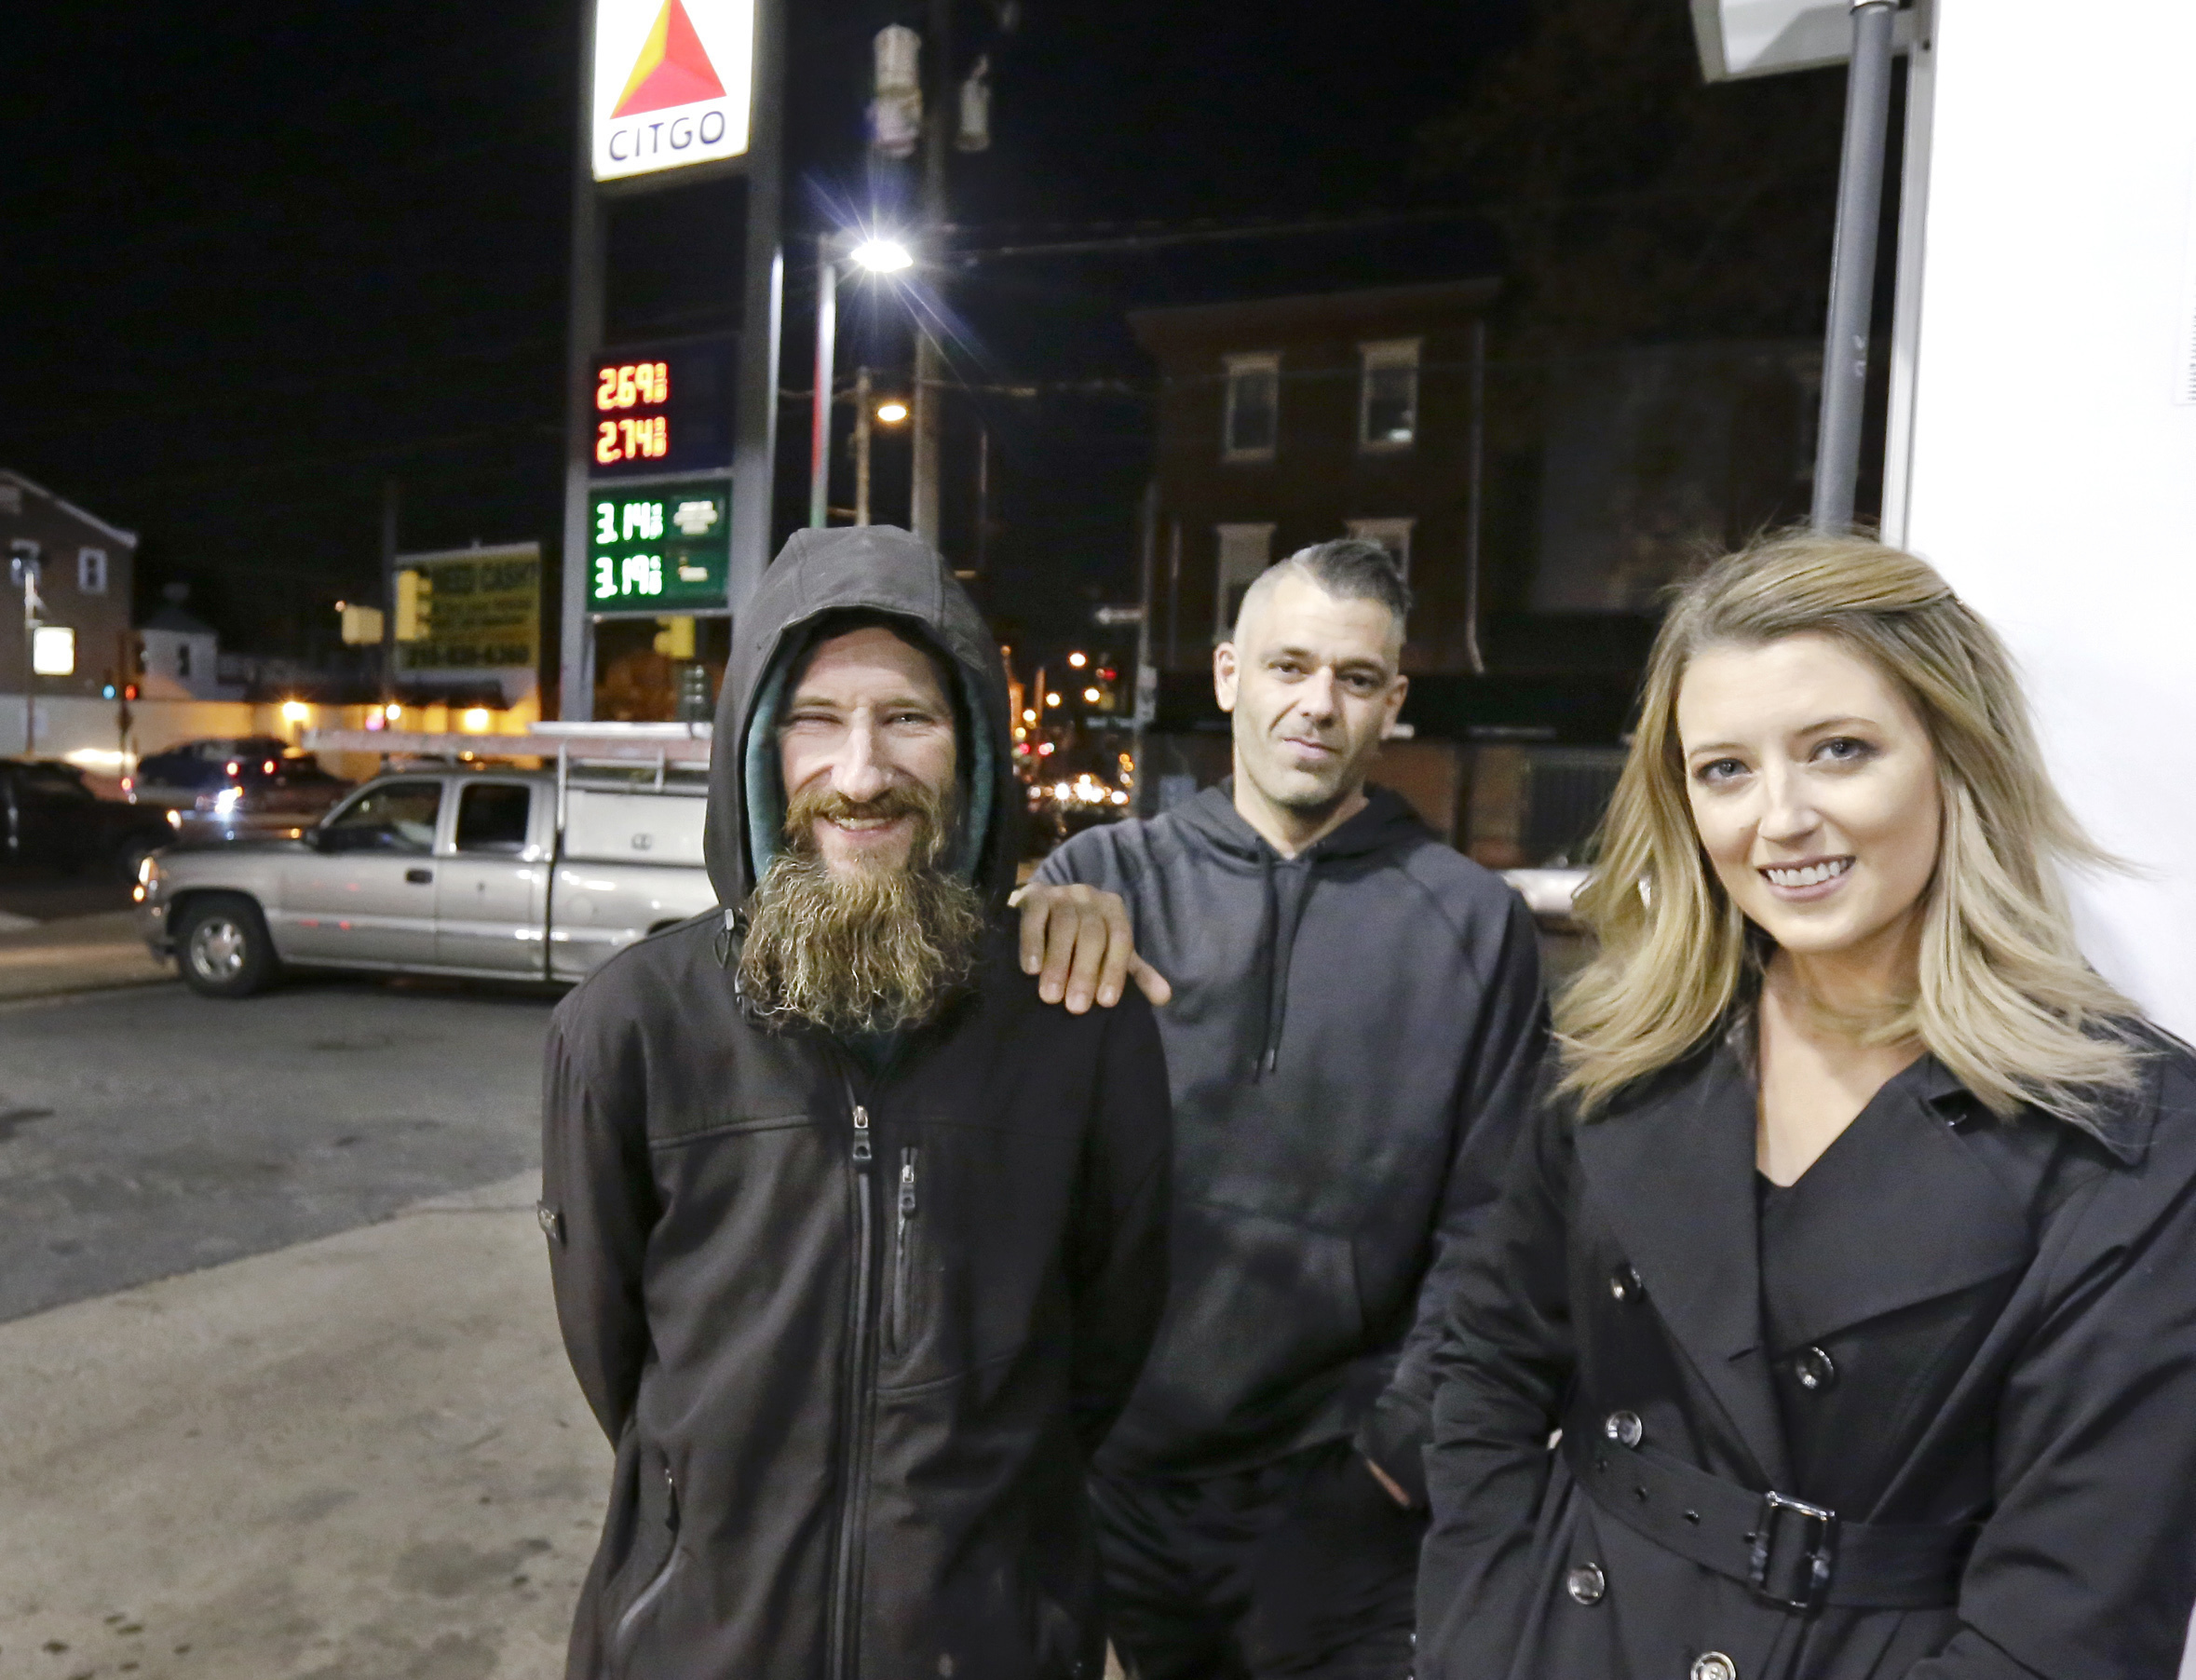 Johnny Bobbitt Jr., left, Kate McClure, right, and McClure's boyfriend Mark D'Amico pose at a Citgo station in Philadelphia. (Elizabeth Robertson&mdash;The Philadelphia Inquirer/AP)